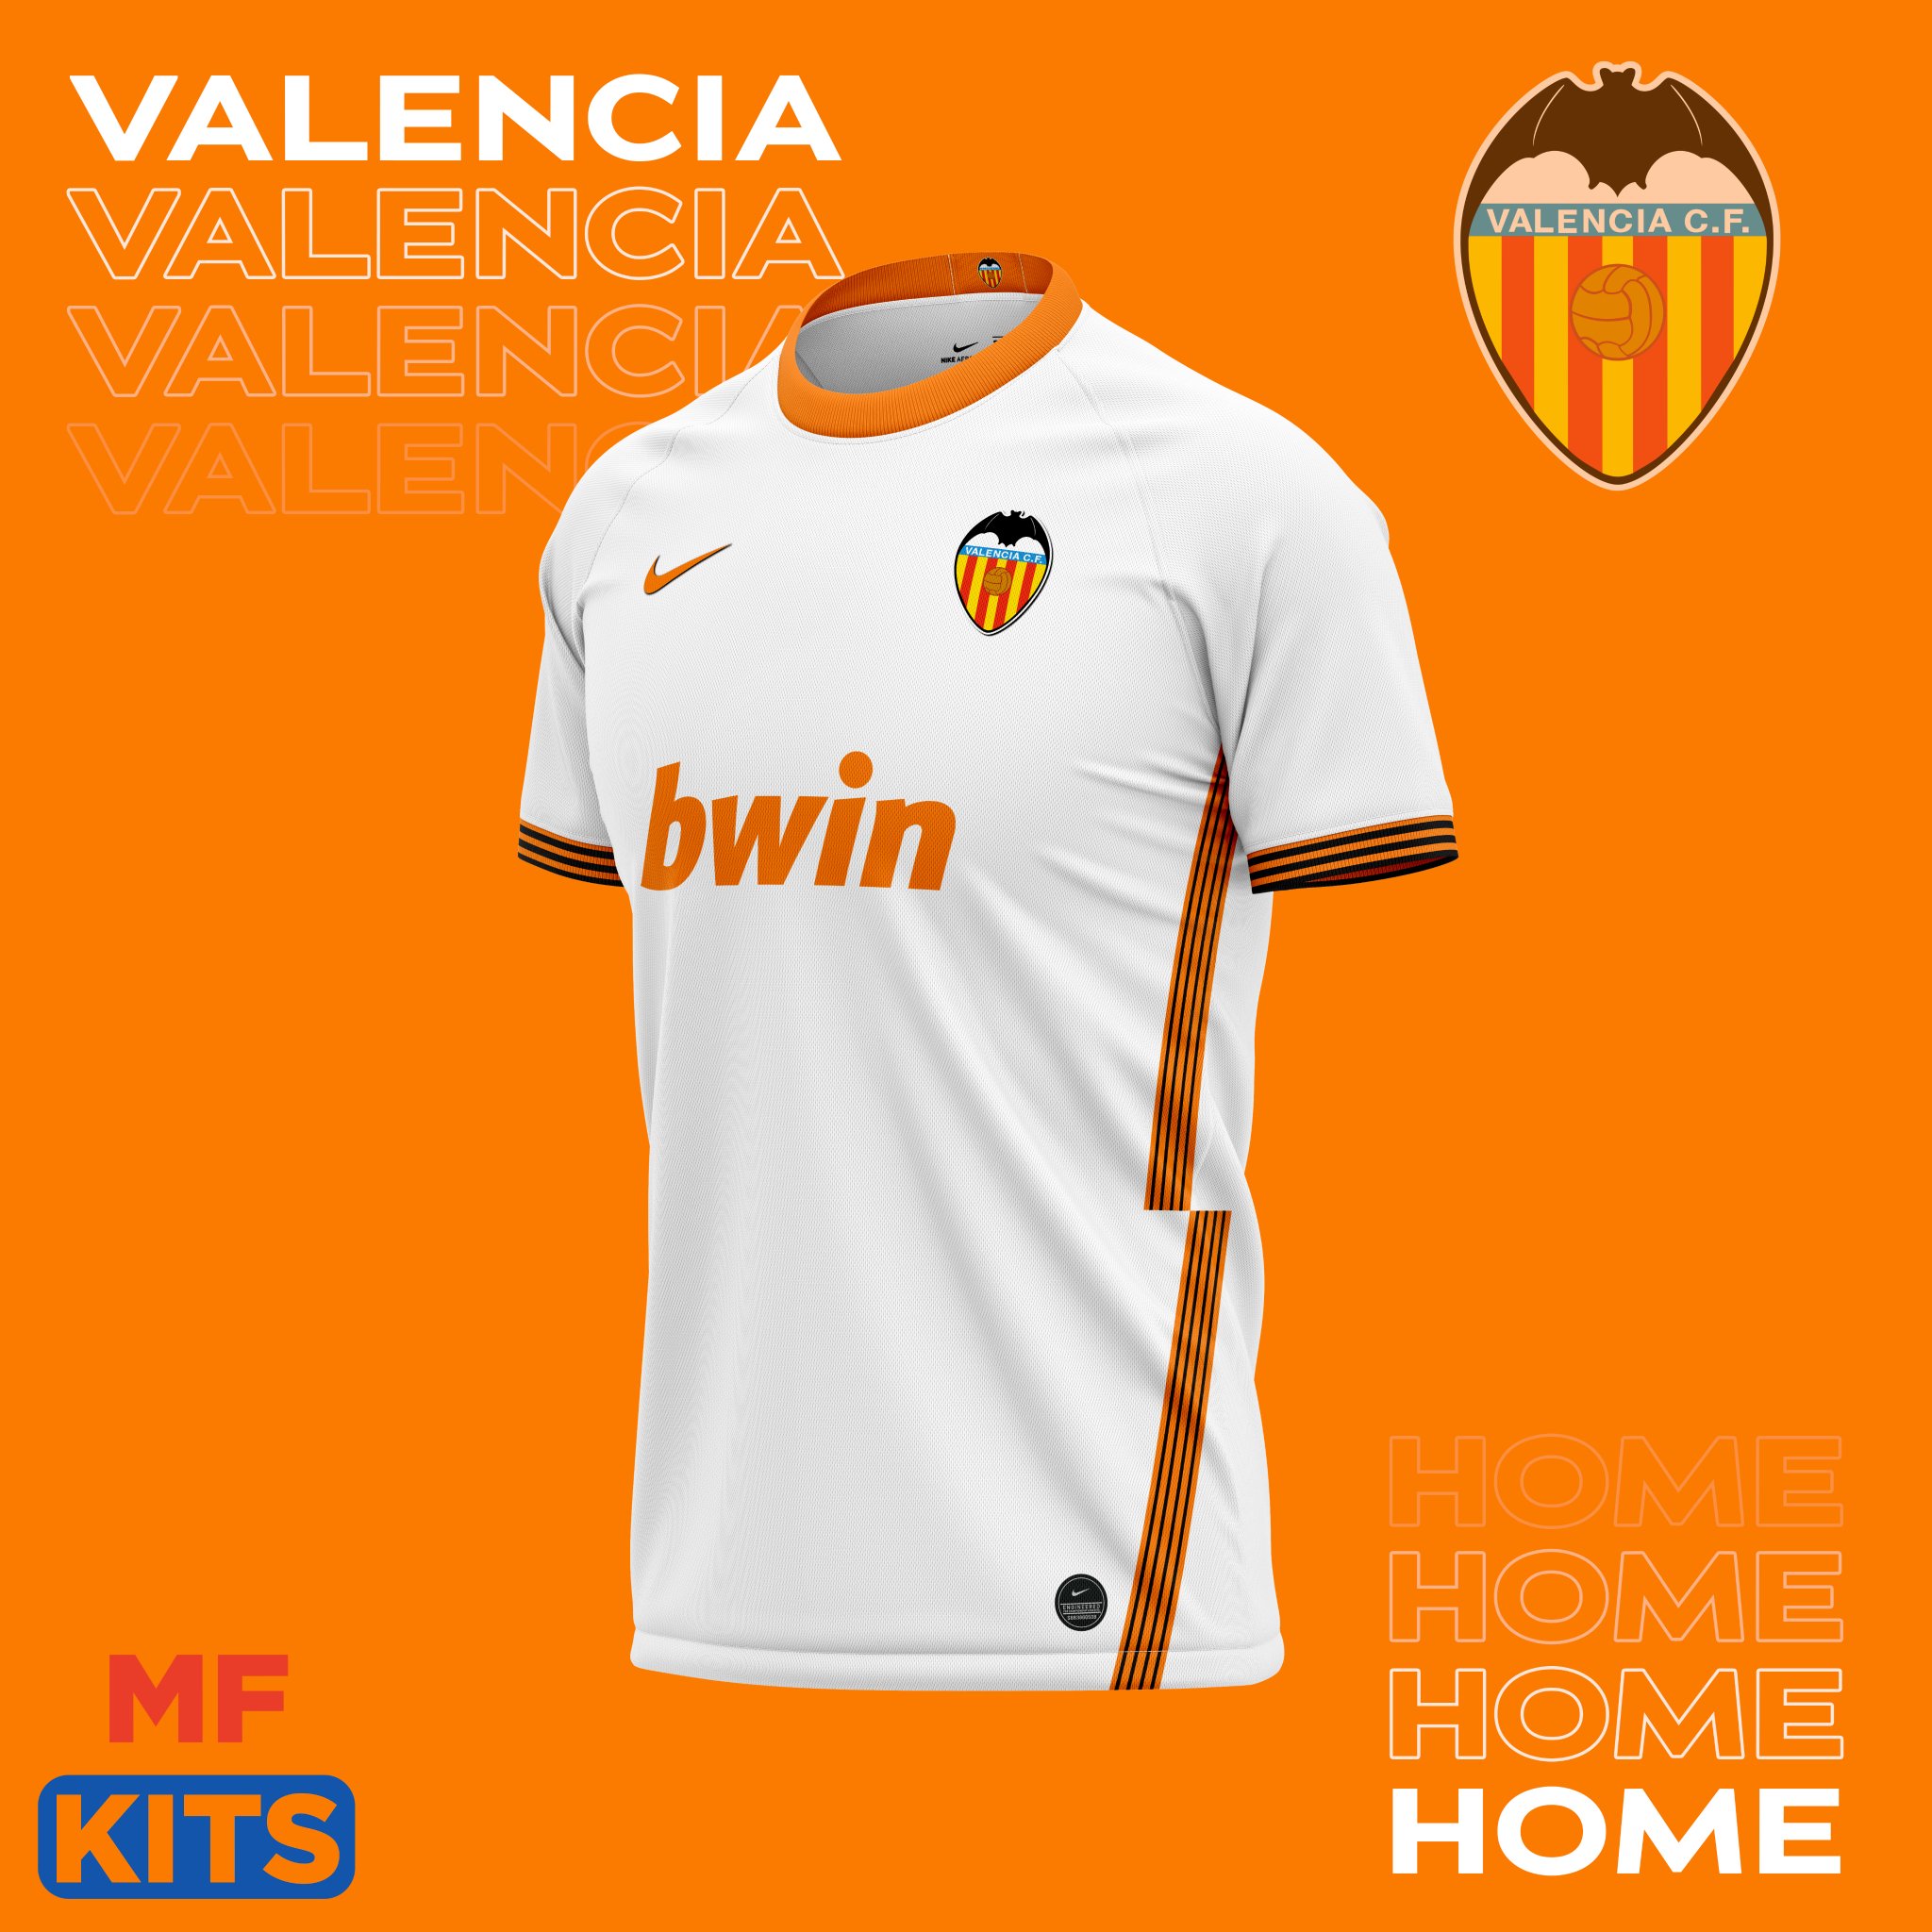 MF Kits on Twitter: "• Concept kits home, away and third - València CF •  València CF x Nike • #ValenciaCF #Valencia @valenciacf 🦇🍊 ❤ et 🔁  appréciés ❤️ y 🔁 apreciados https://t.co/65FV9sC9qj" / Twitter